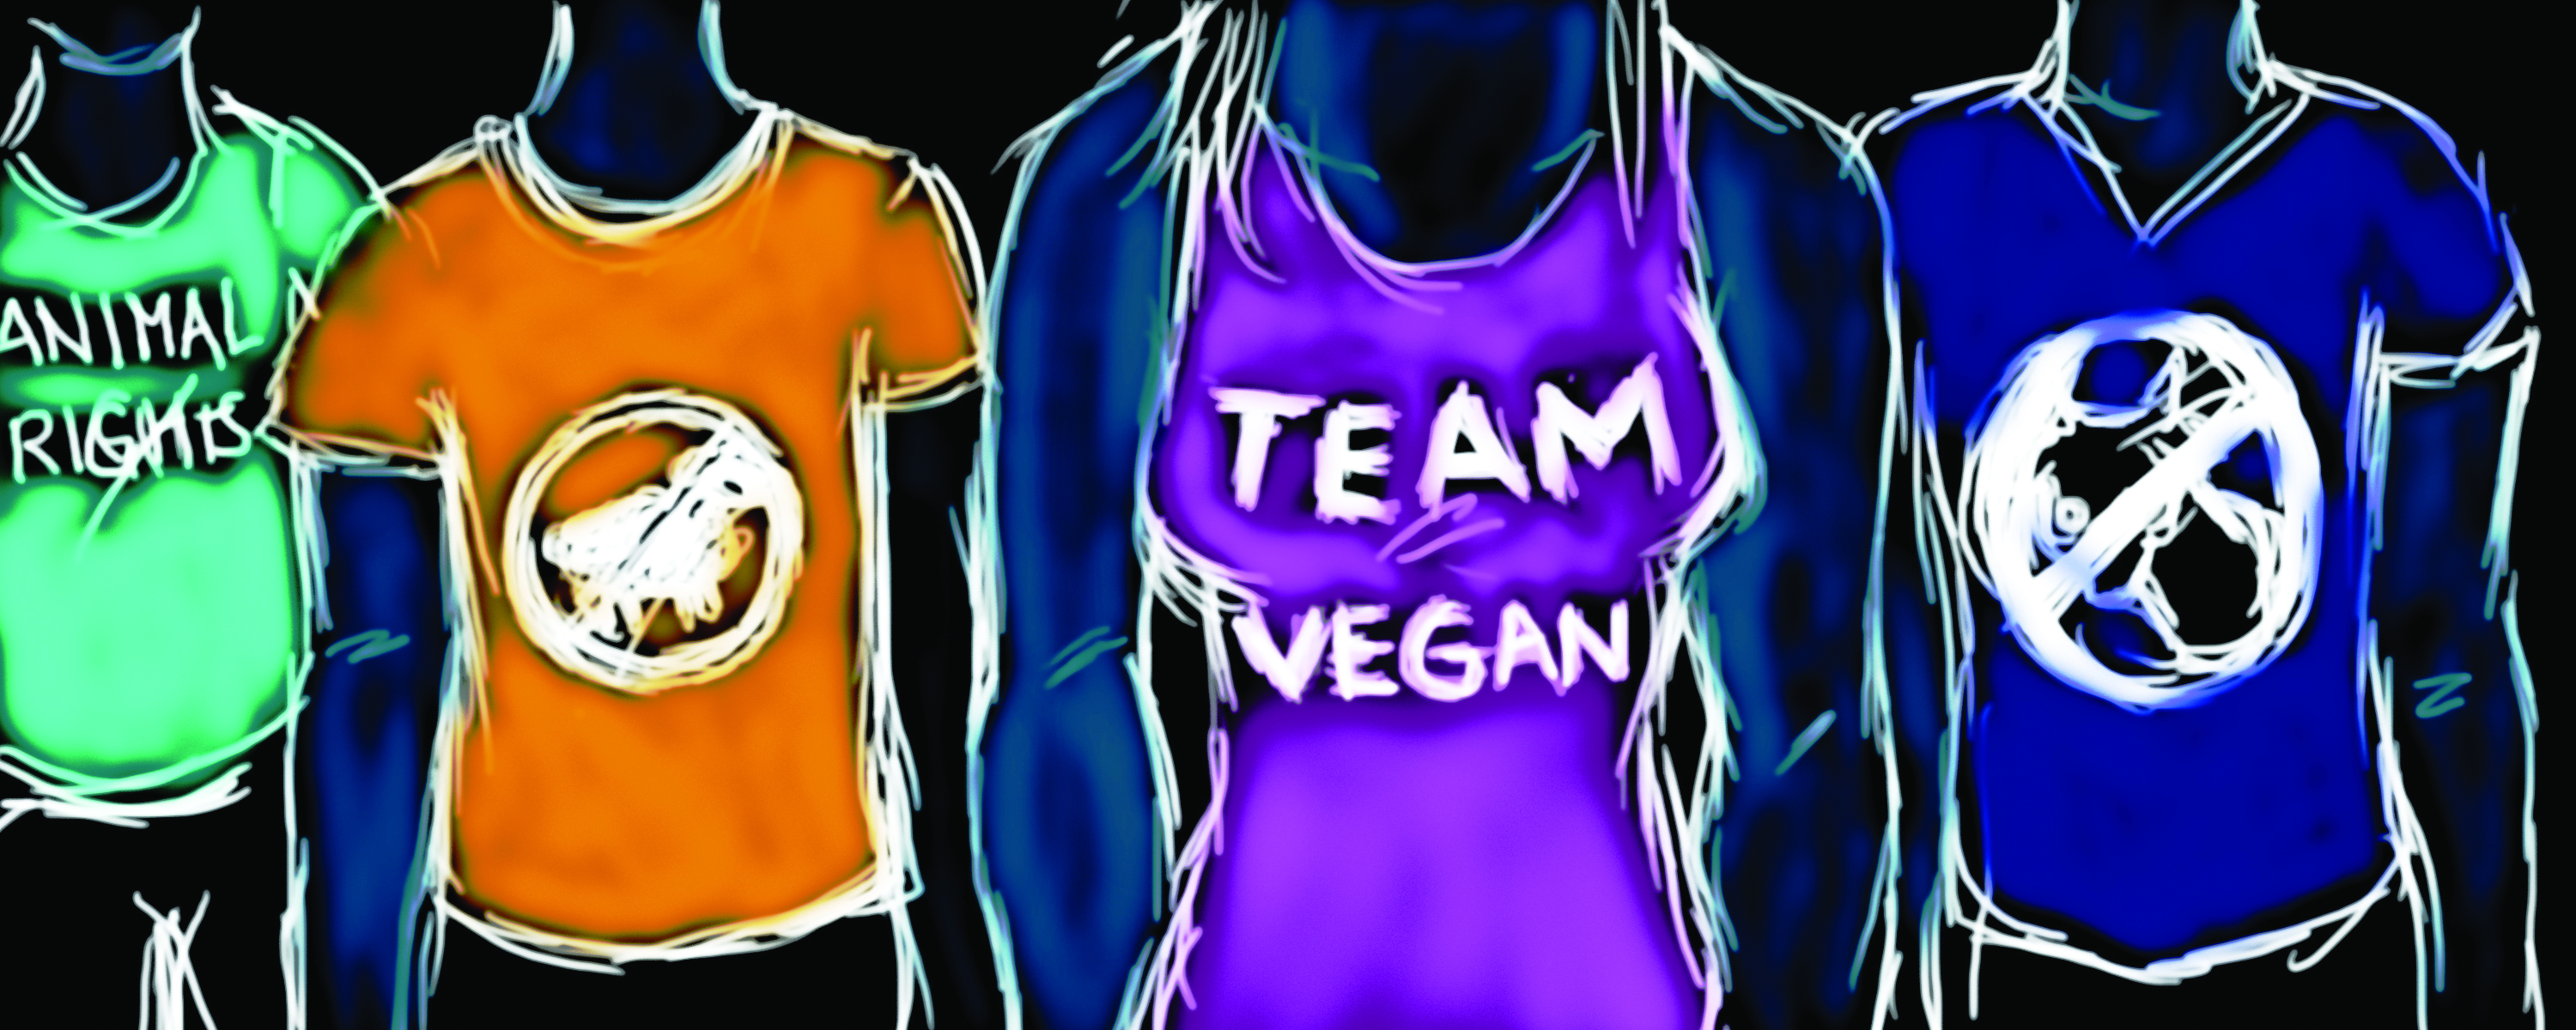 team vegan